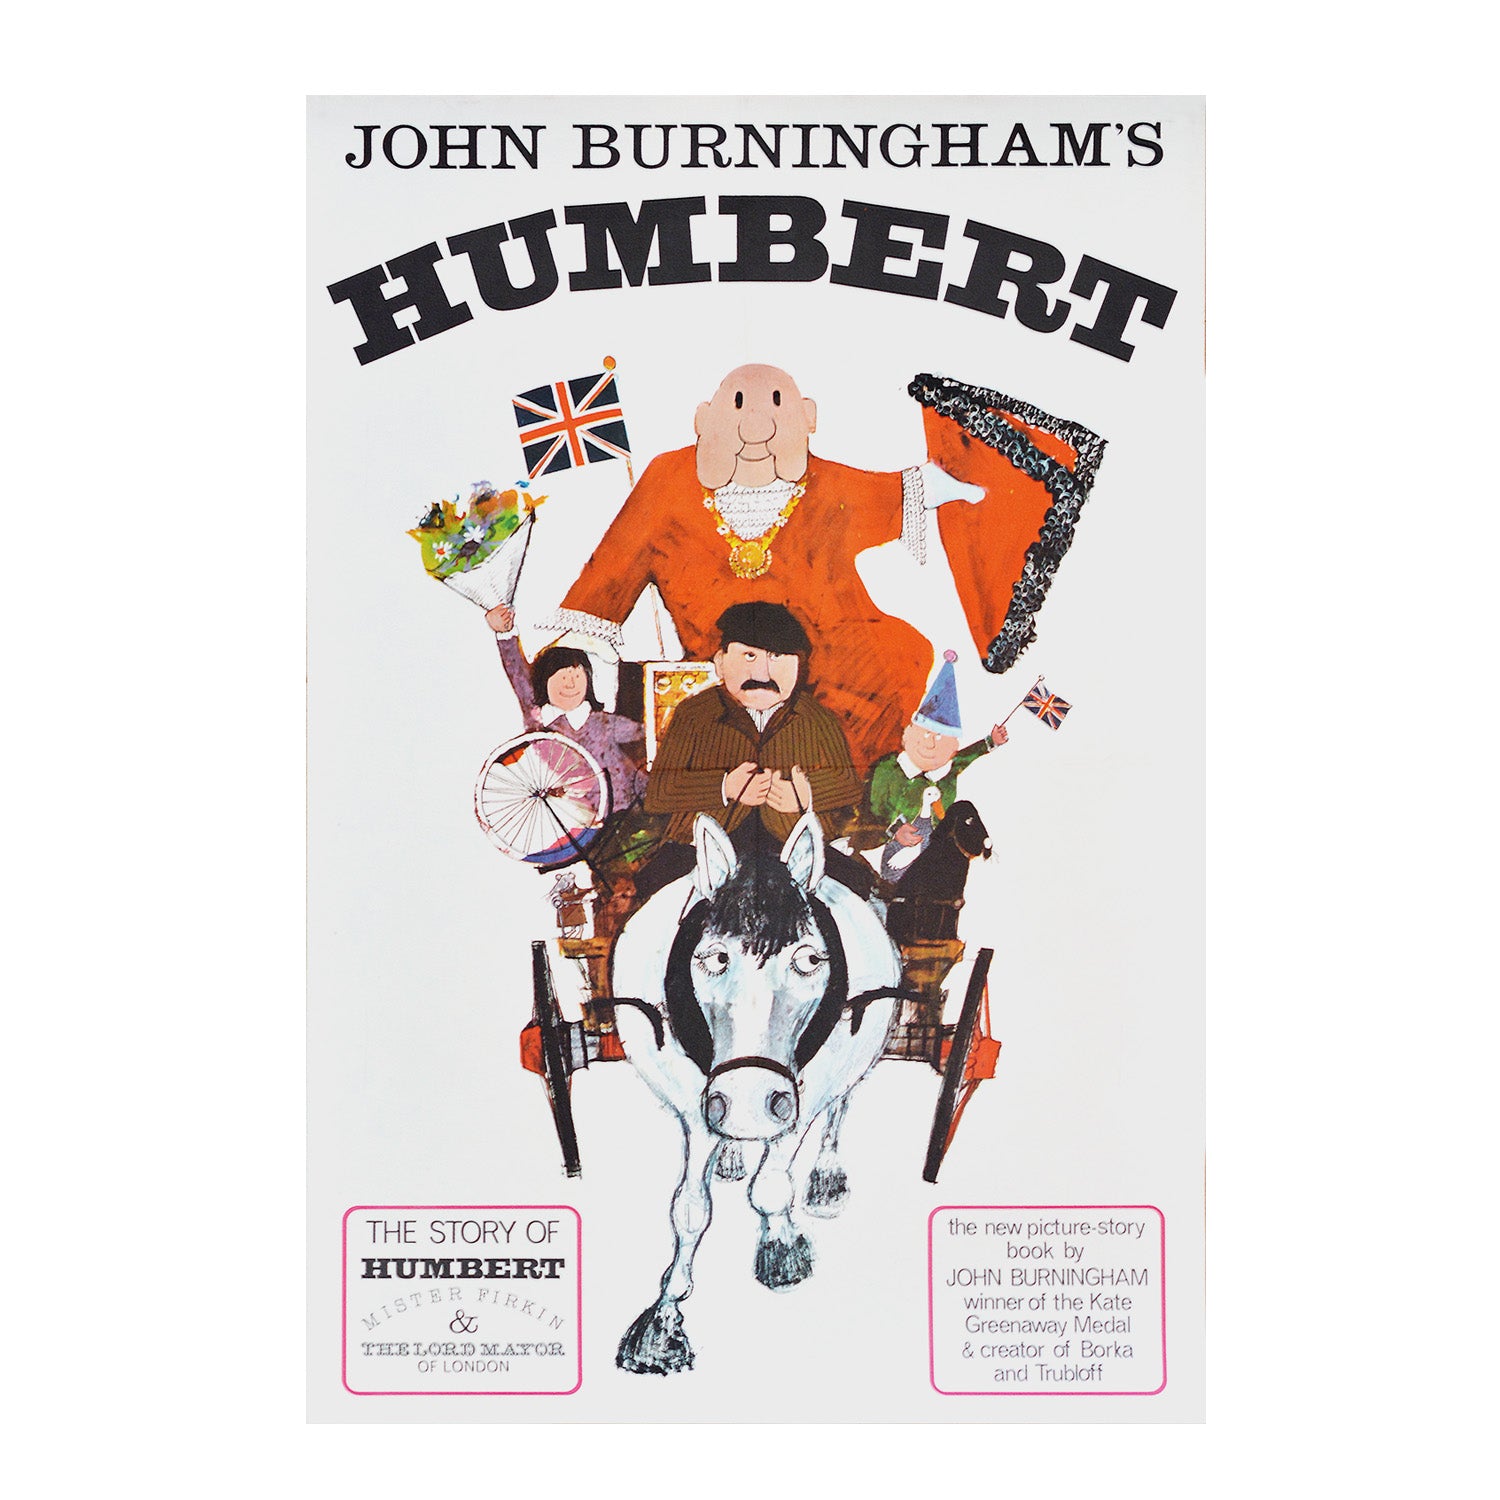 original promotional poster for John Burningham's joyful children's book Humbert, featuring a scene from the story (1965).